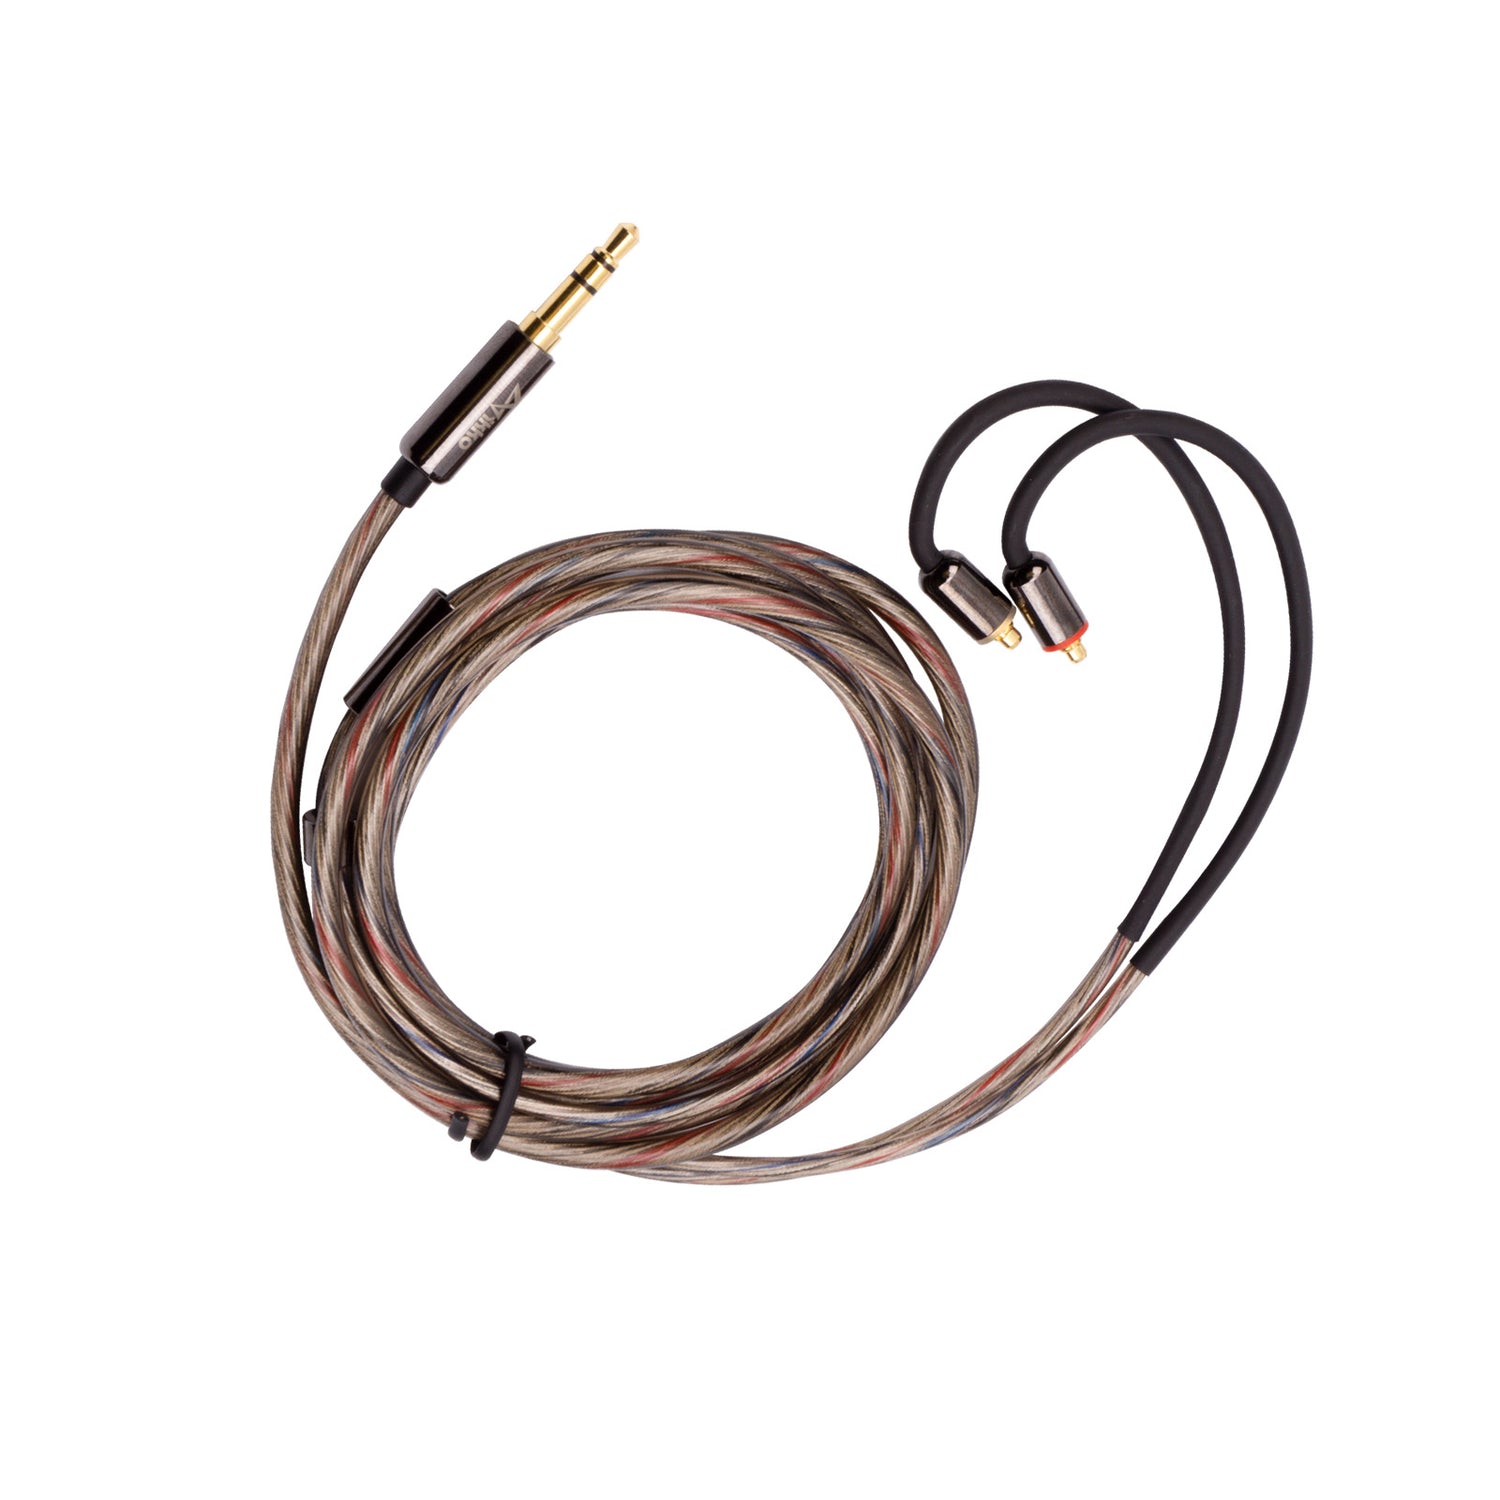 ikko audio ctu01-mmcx-2pin-0.78-audio-headphones-earbuds-earphone-music-sound-cable-accessories-dynamic-hifi-audiophile